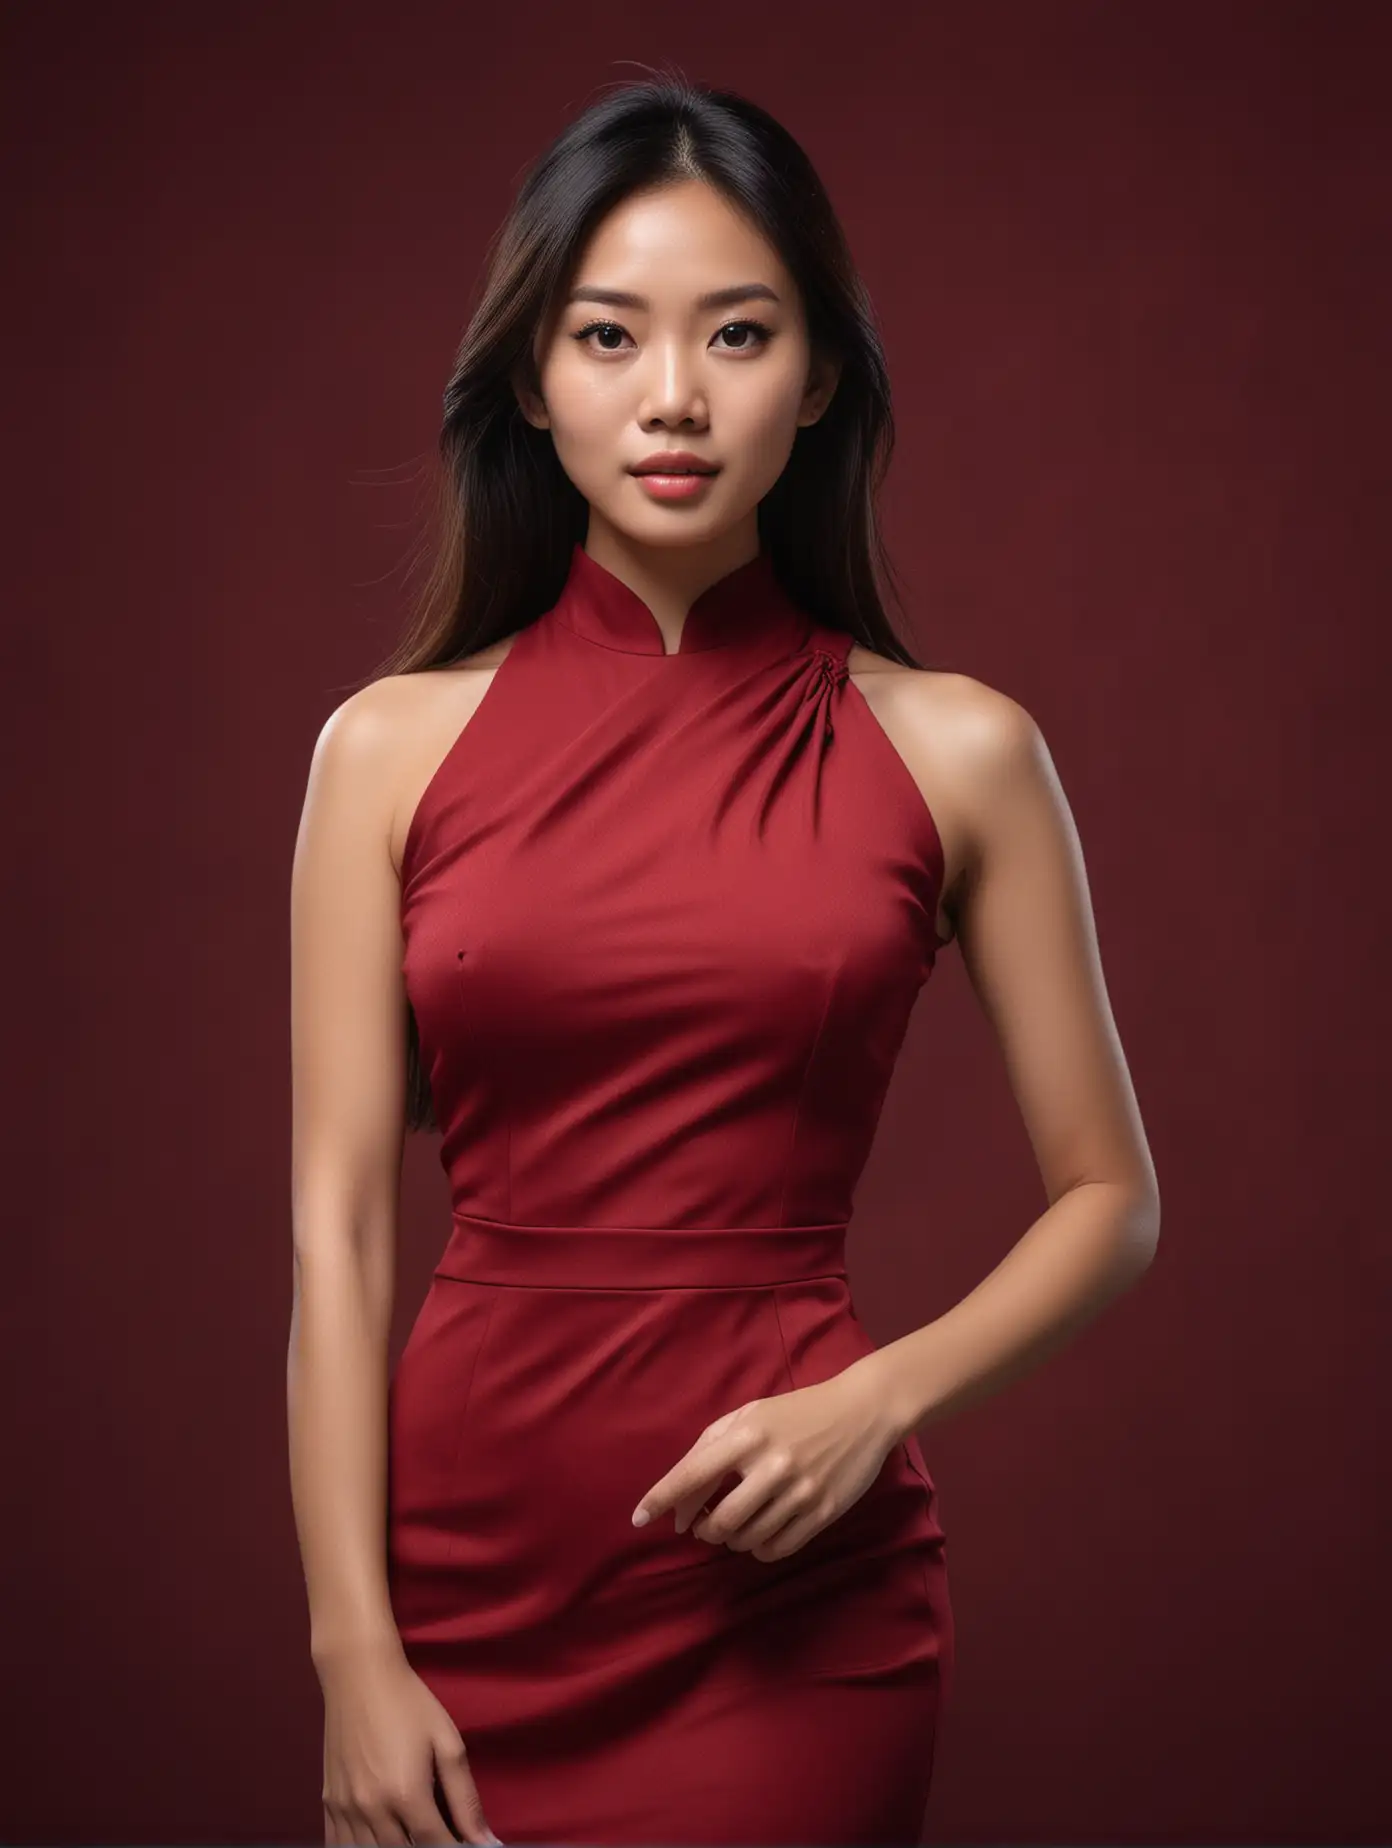 Elegant Vietnamese Woman in Dark Red Dress Against Monochromatic Background